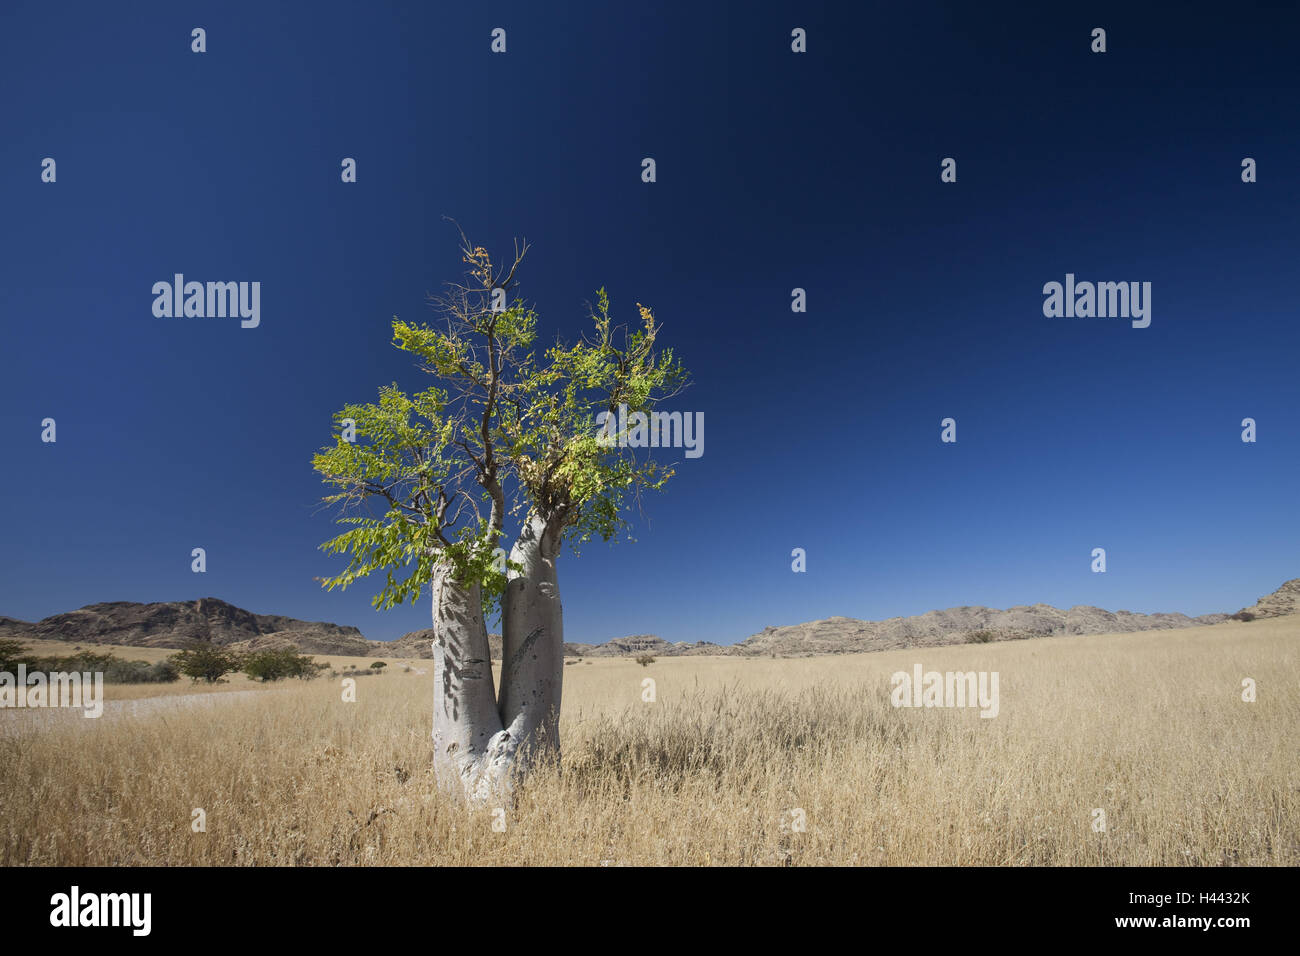 Africa, Namibia, region Kunene, southern Kaokoveld, balm tree, Commiphora, Stock Photo